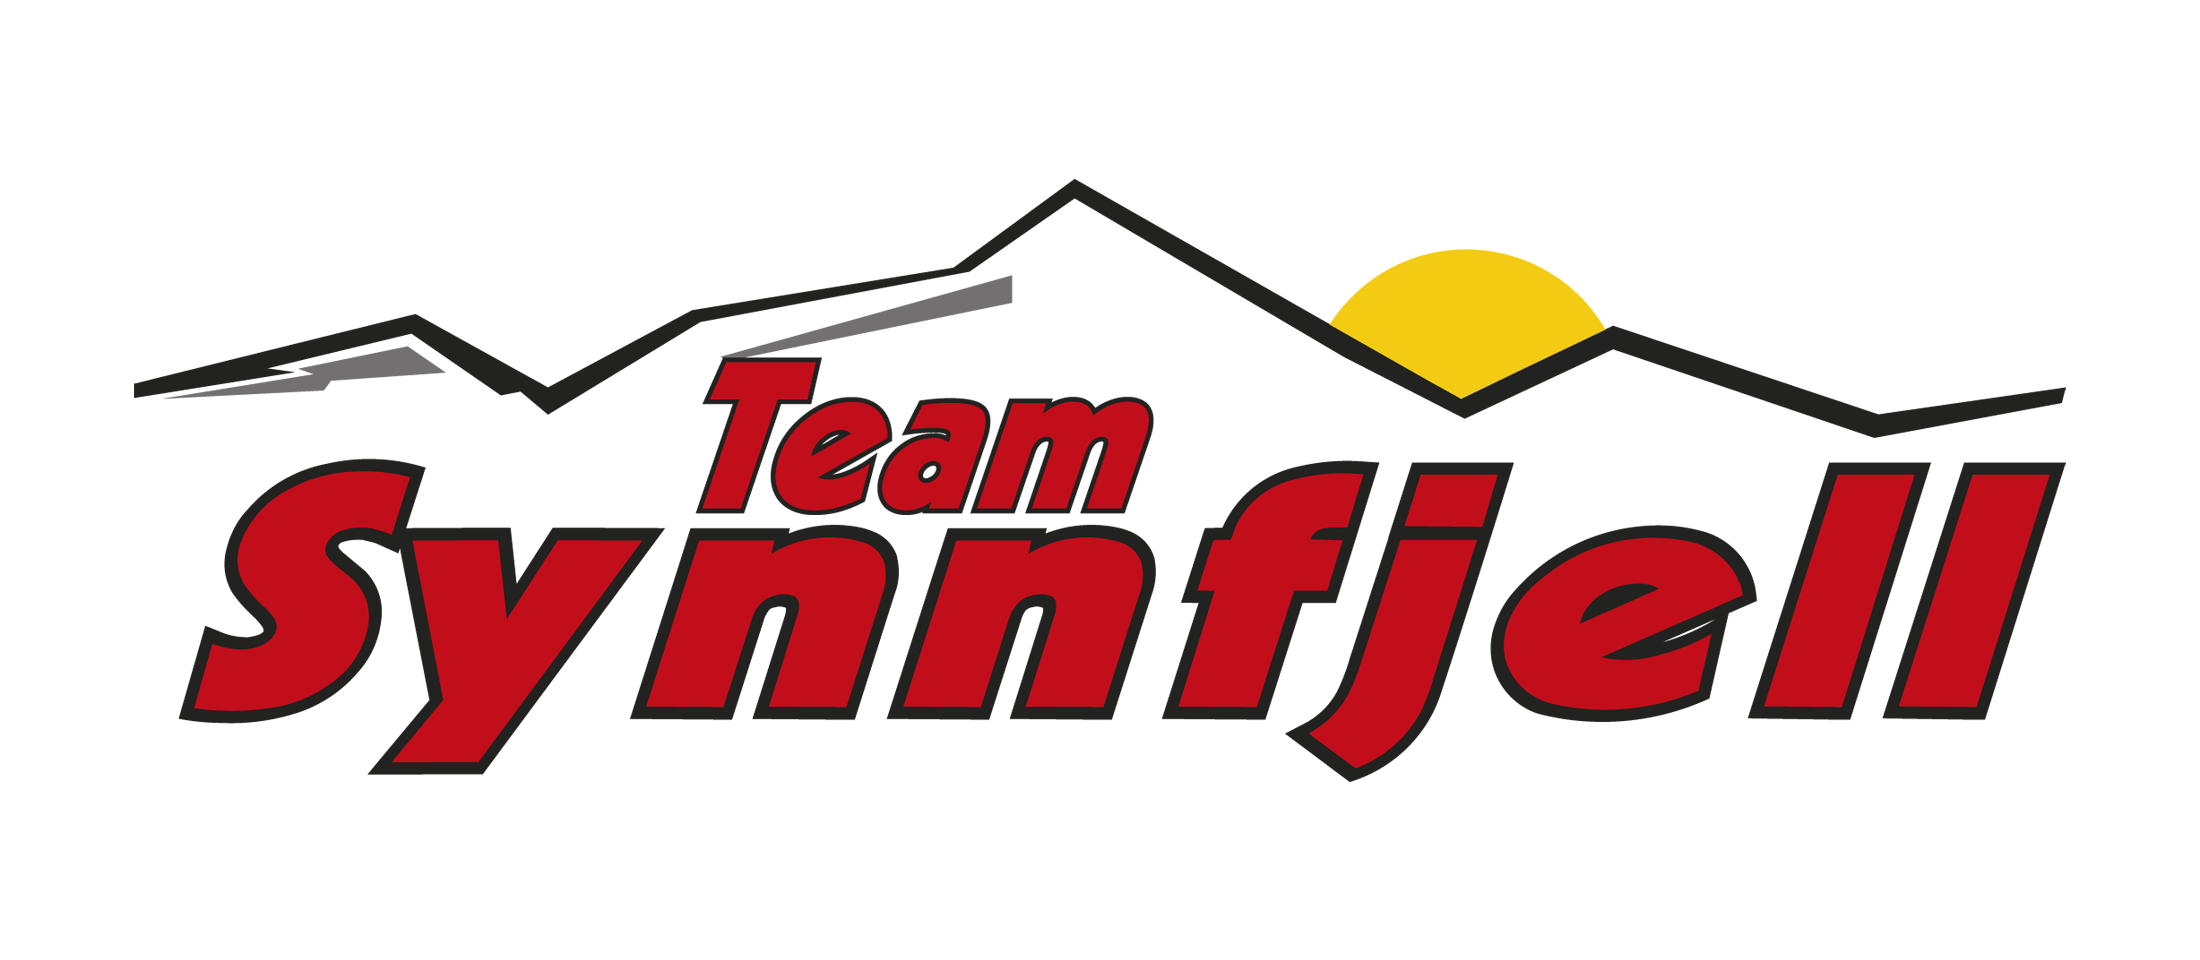 Team Synnfjell logo